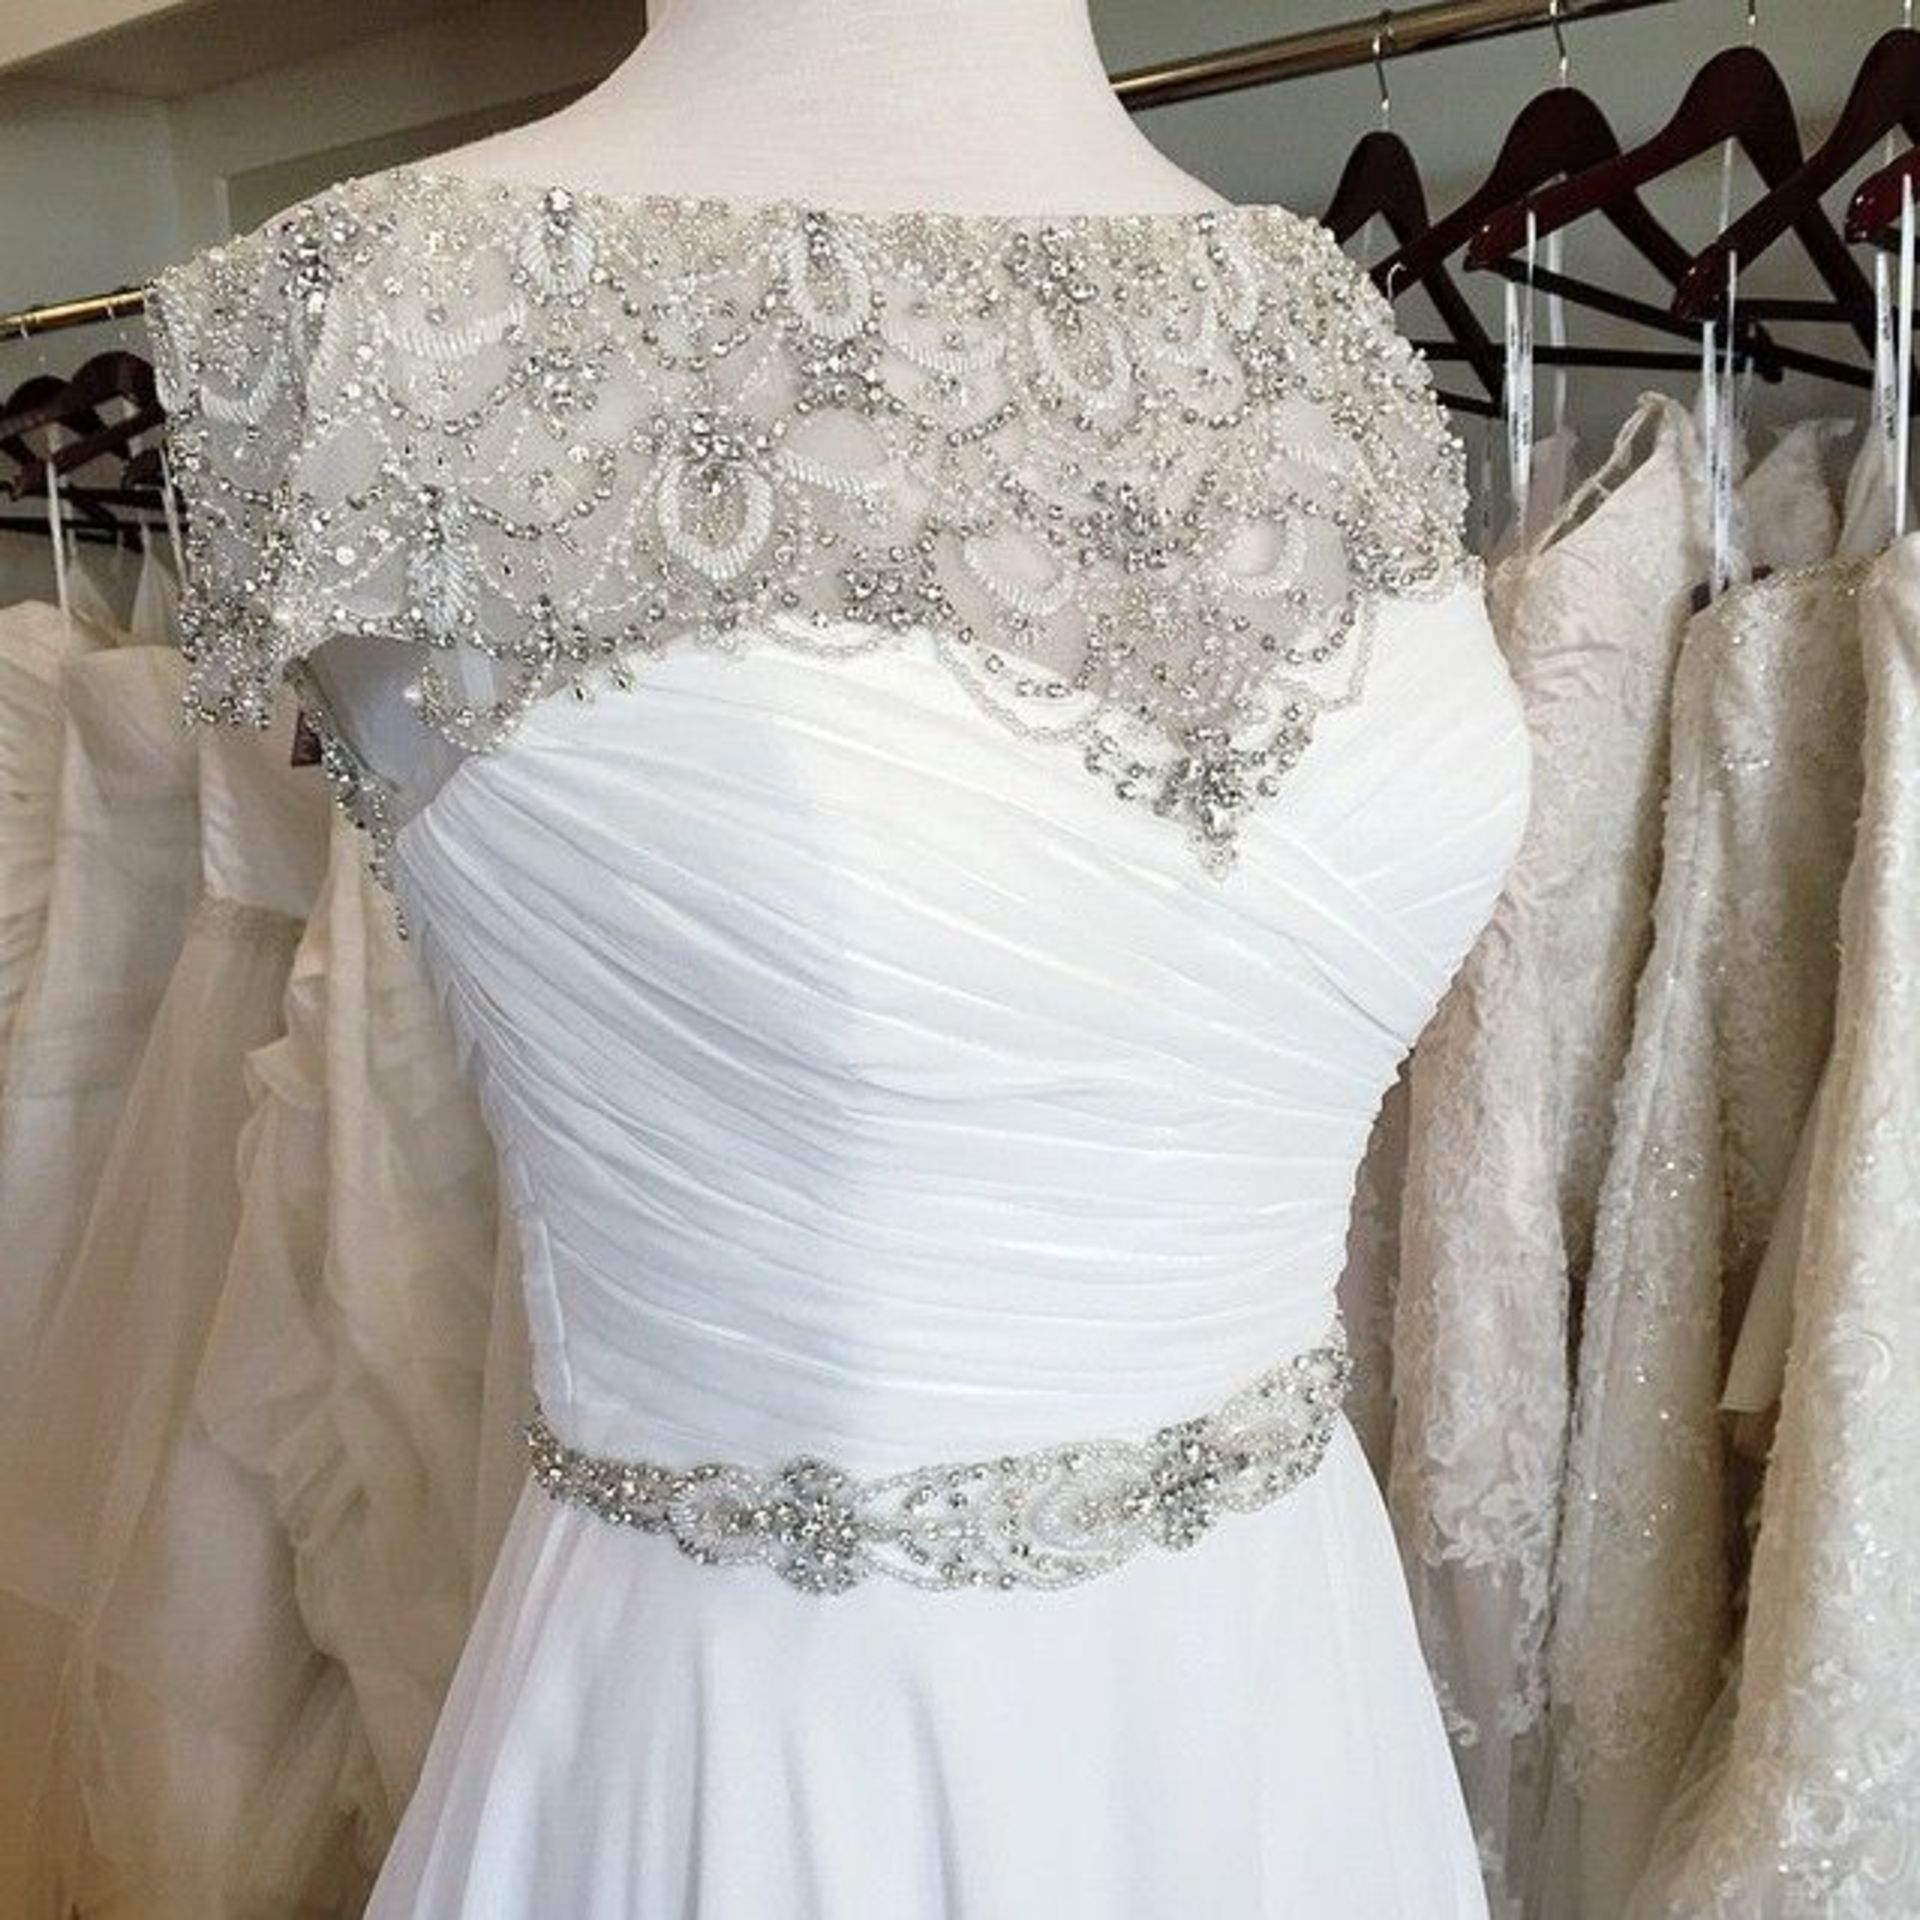 1 x Justin Alexander 'Aphrodite' Chiffon Bridal Gown - UK Size 16 - RRP £1,415 - Image 6 of 23